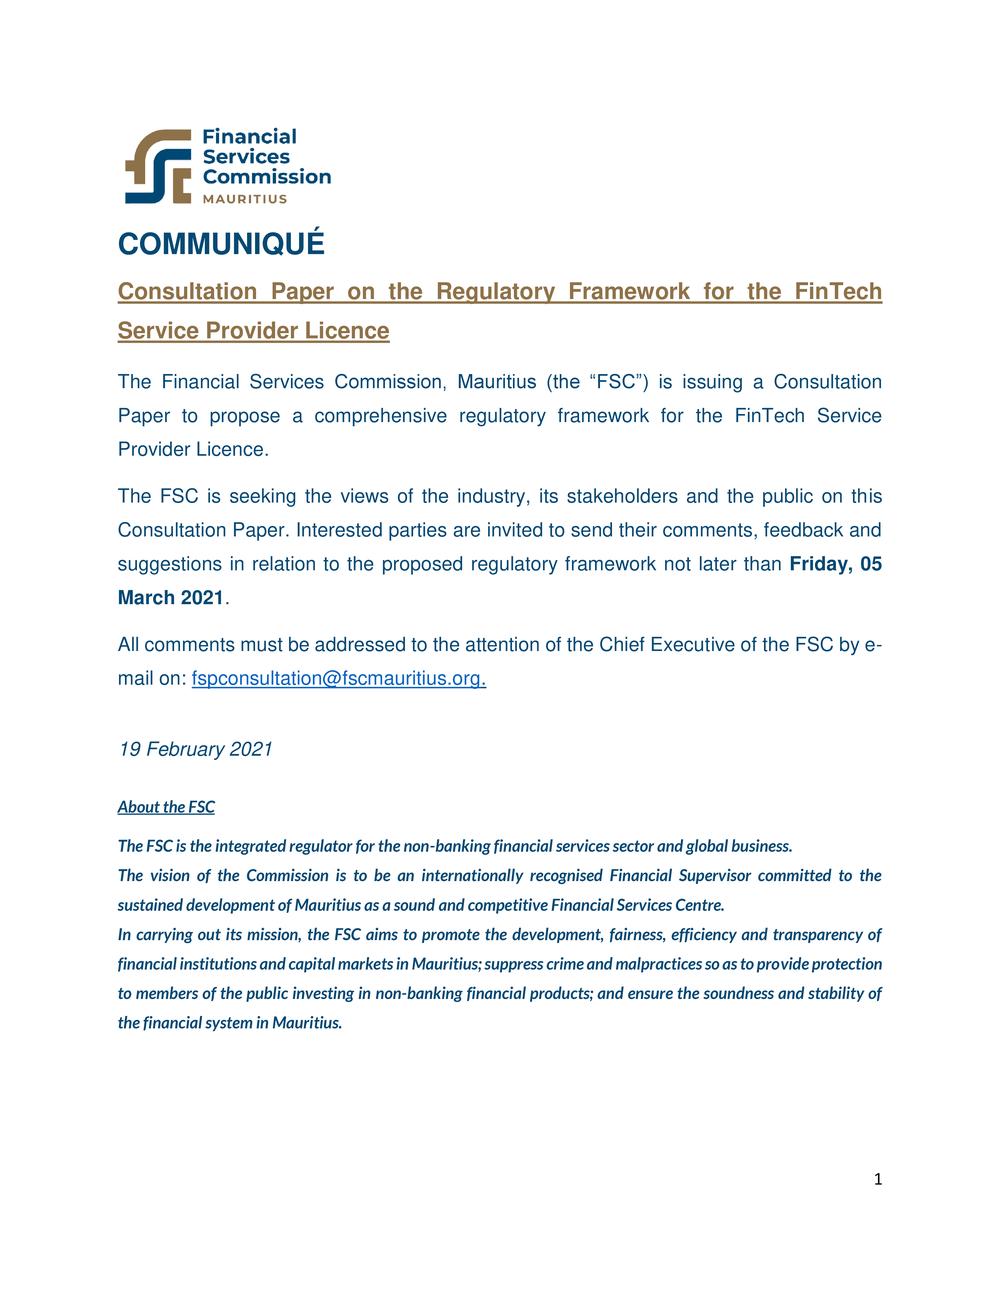 Consultation Paper on the Regulatory Framework for the FinTech Service Provider License